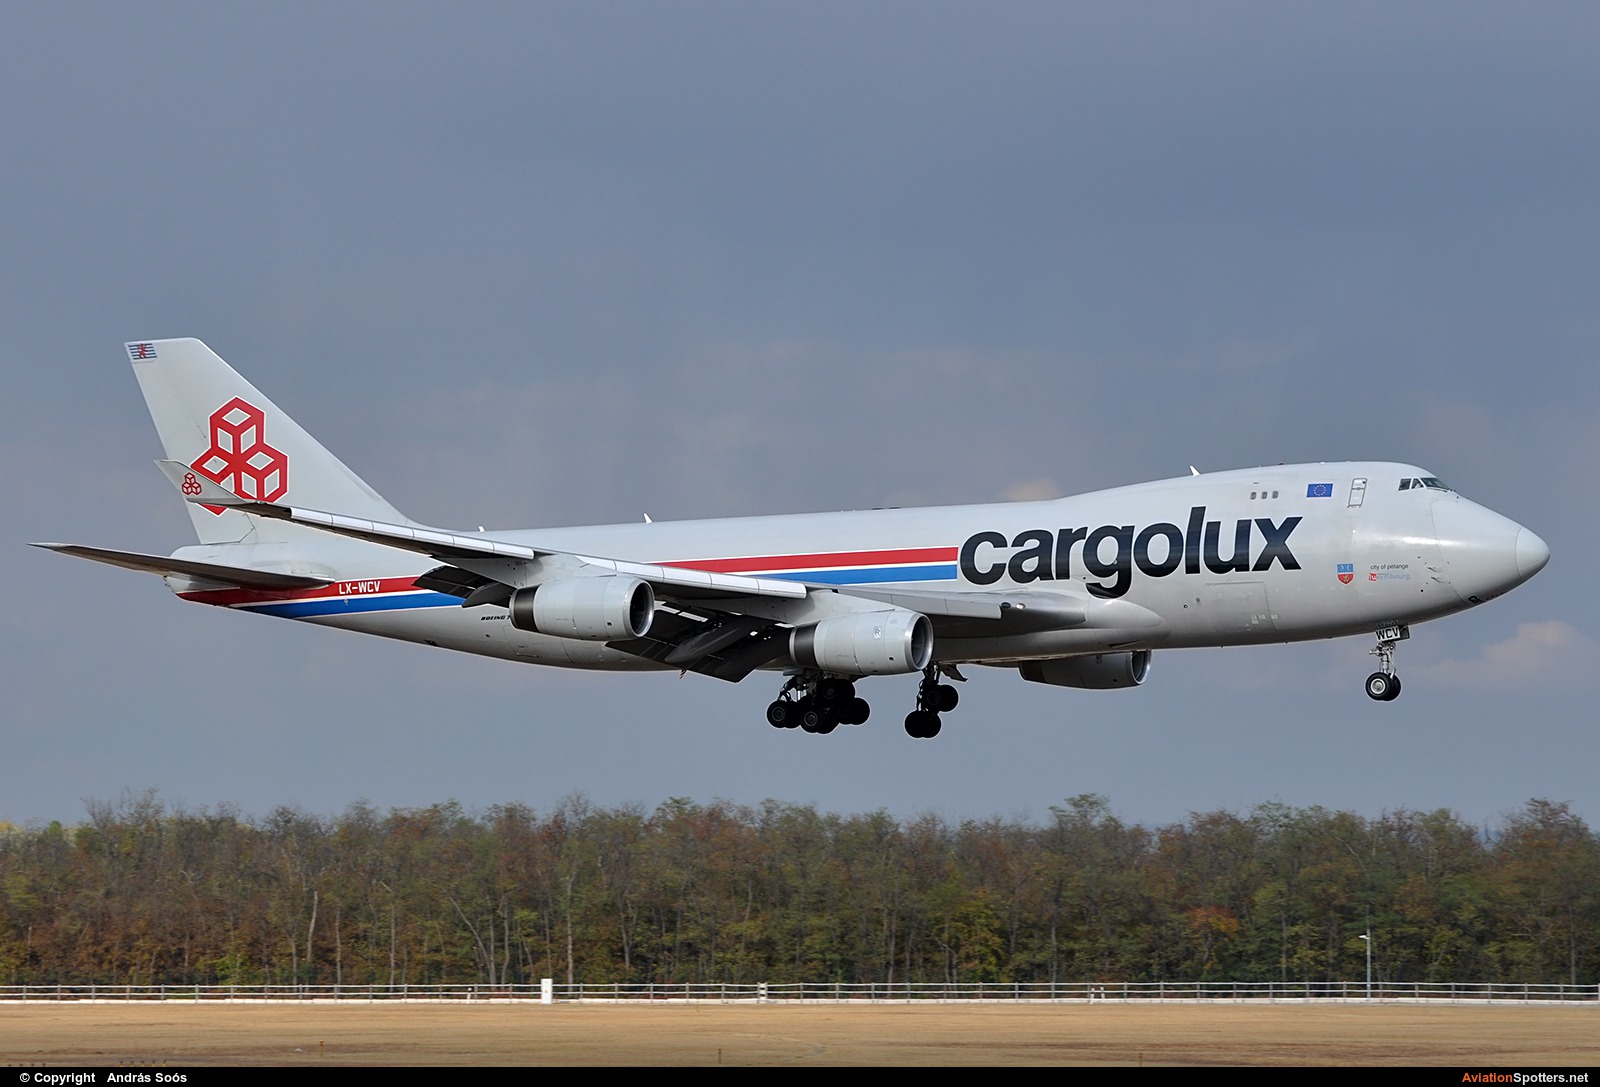 Cargolux  -  747-400F  (LX-WCV) By András Soós (sas1965)